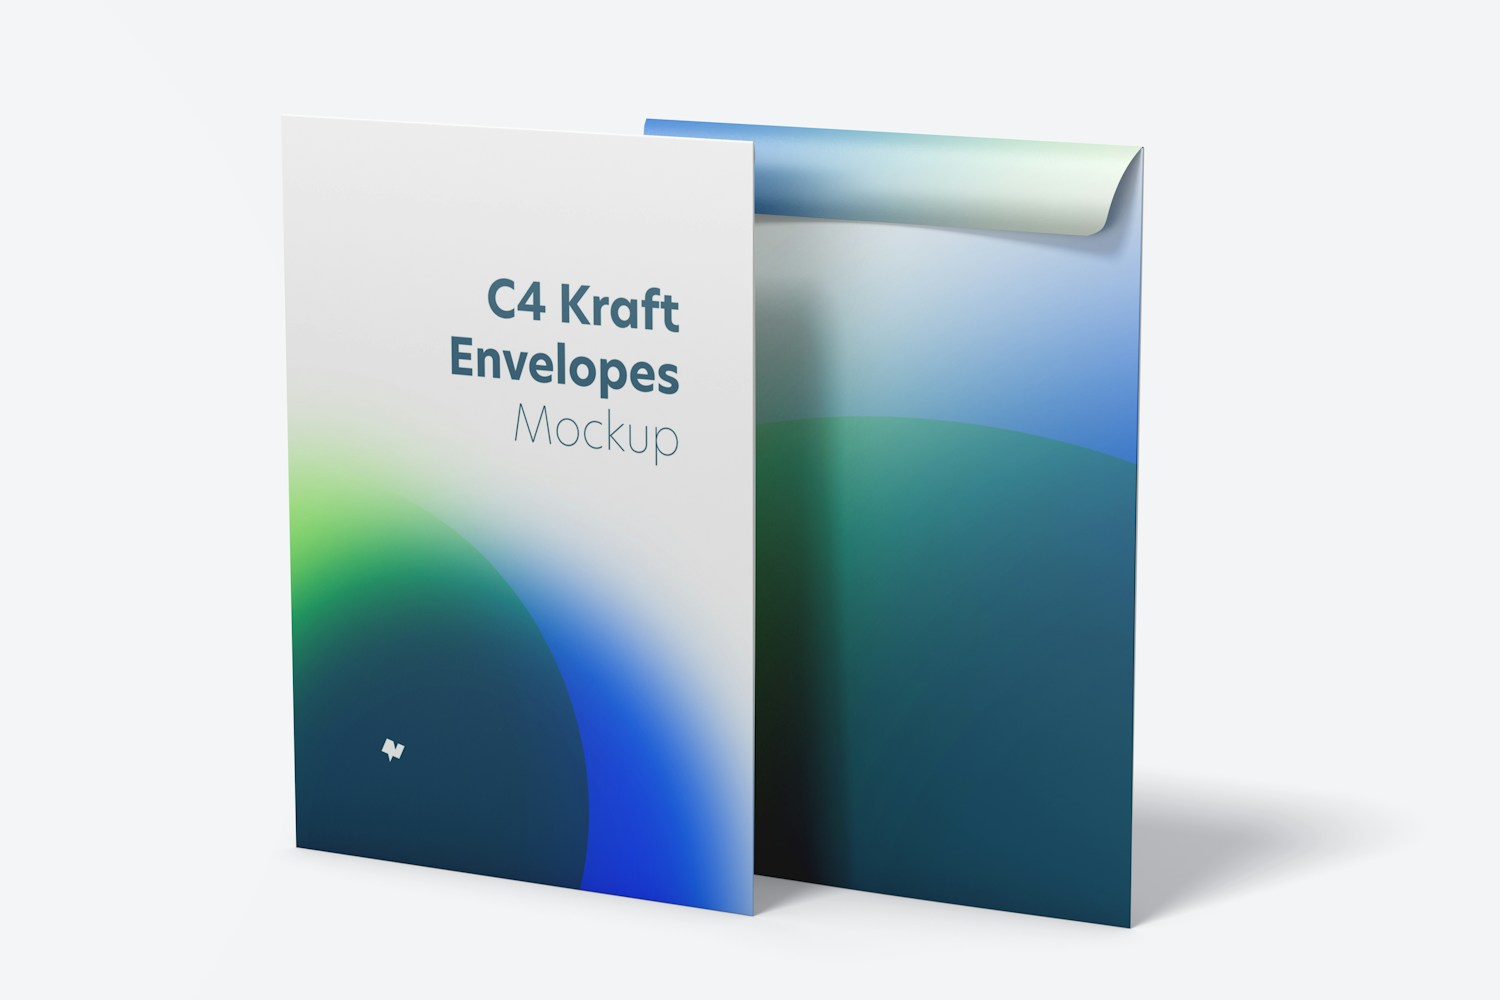 C4 Kraft Envelopes Mockup, Front and Back View